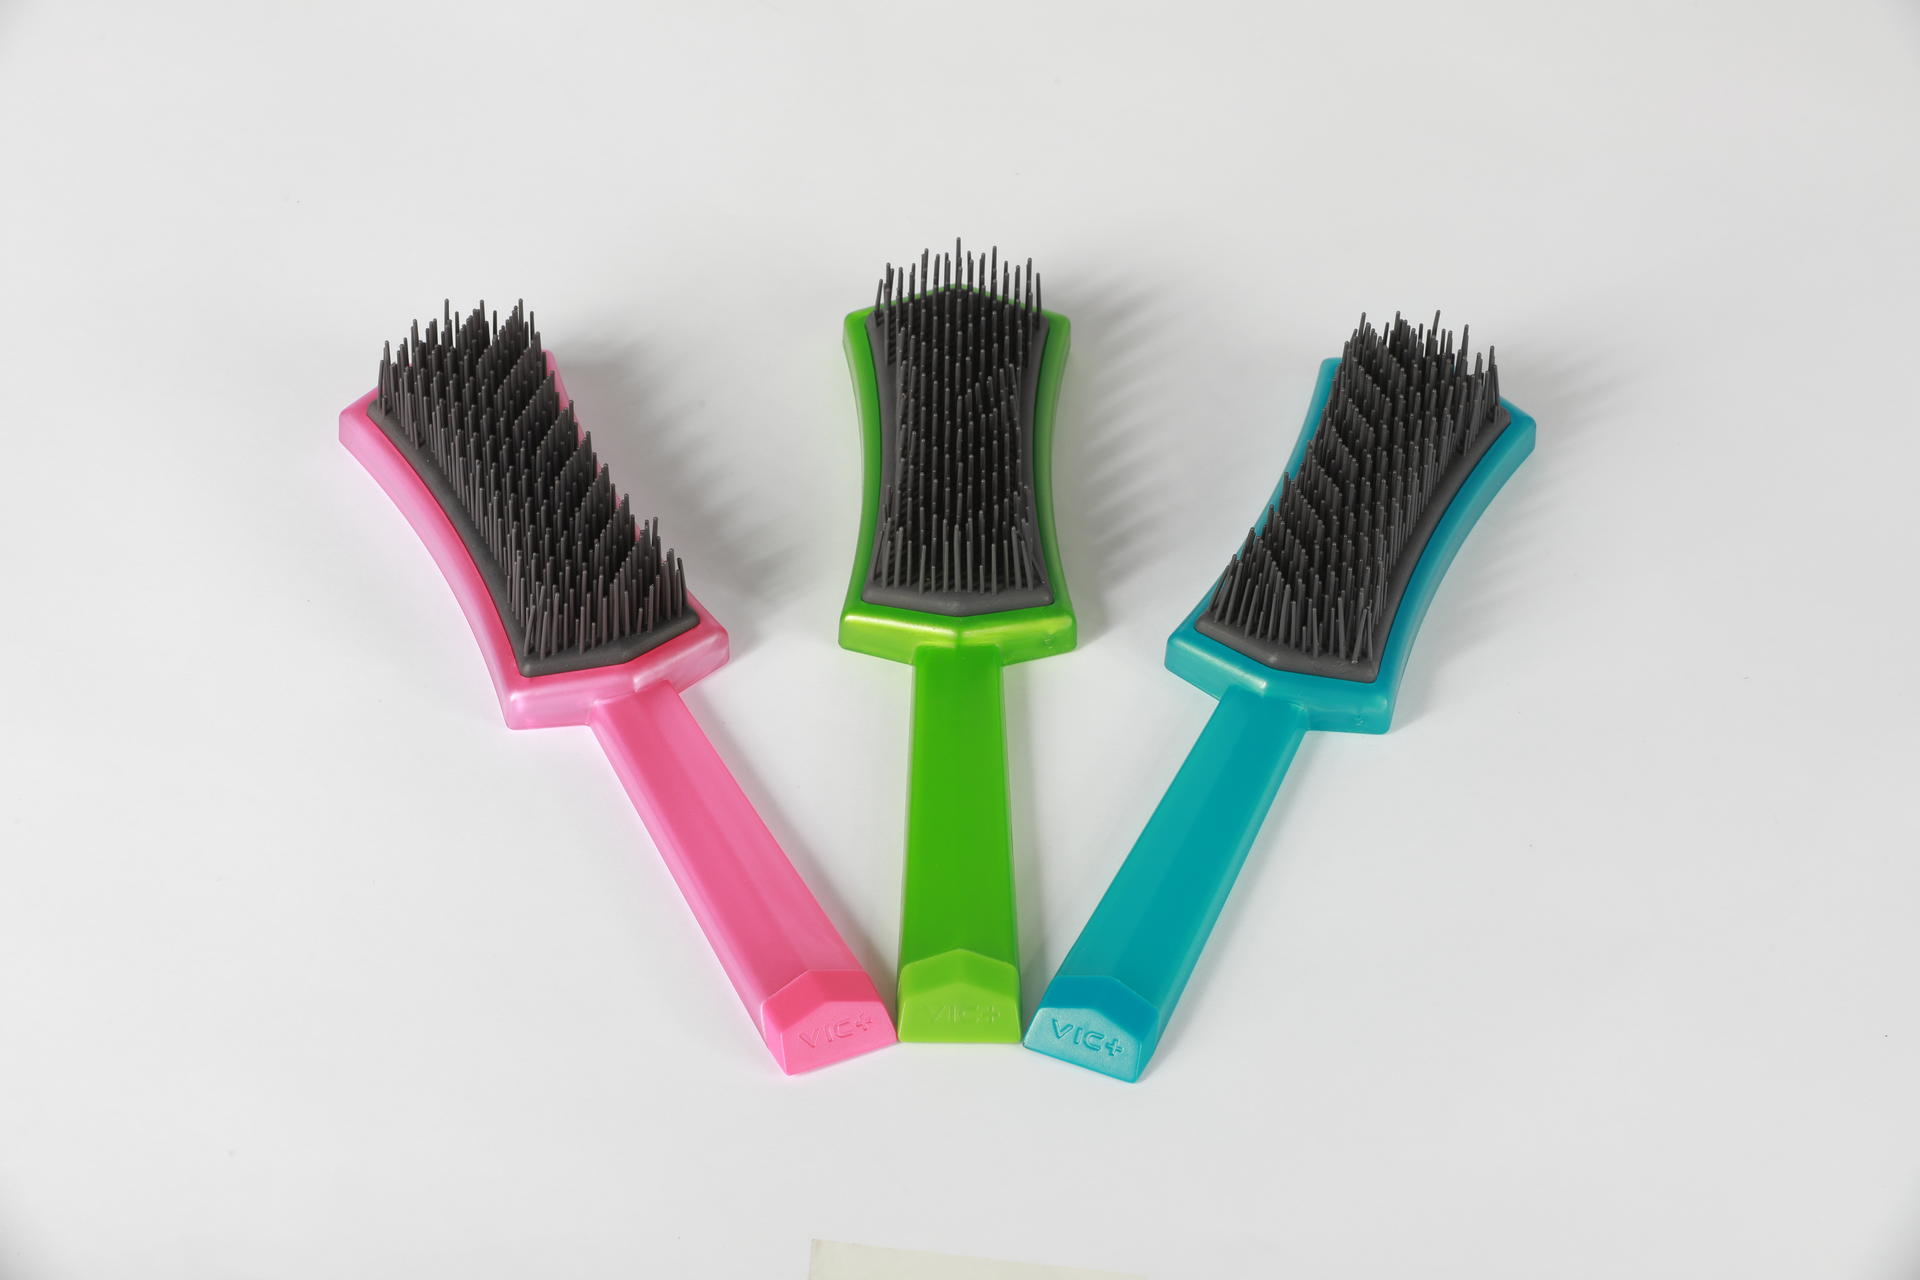 professional plastic fashionable plastic girls hair comb hairbrush brush salon care makeup